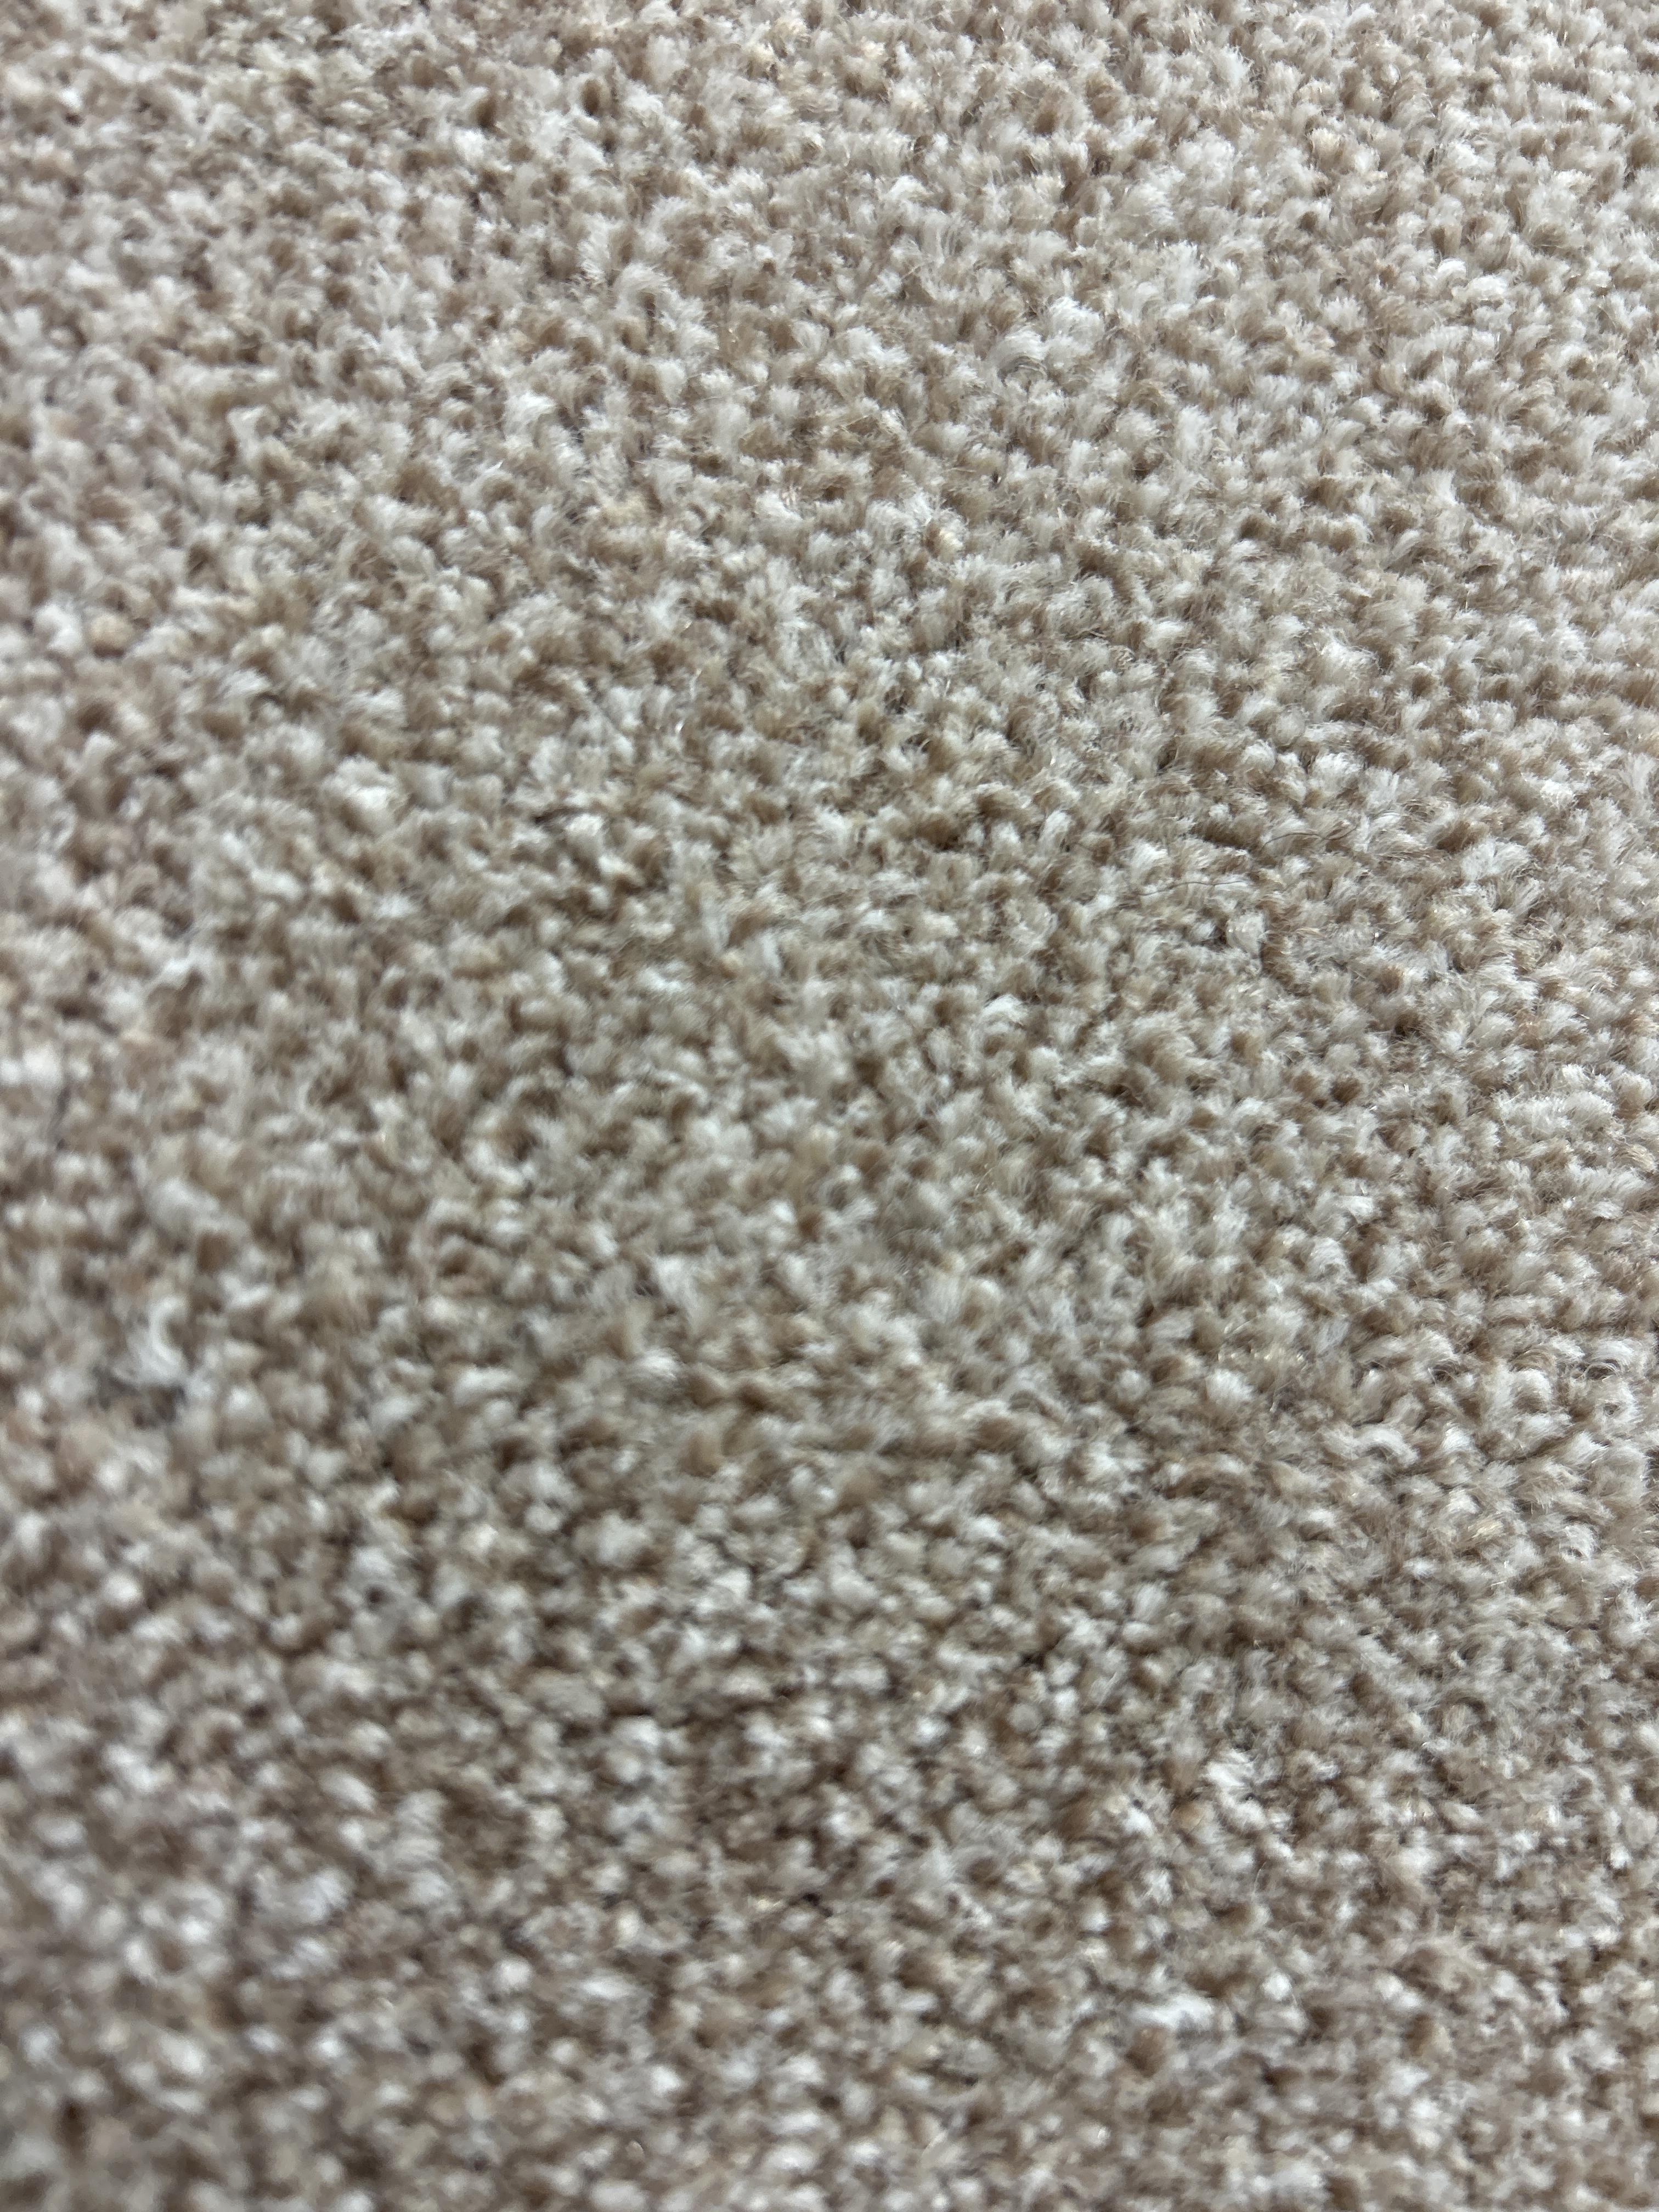 Supertwist carpet